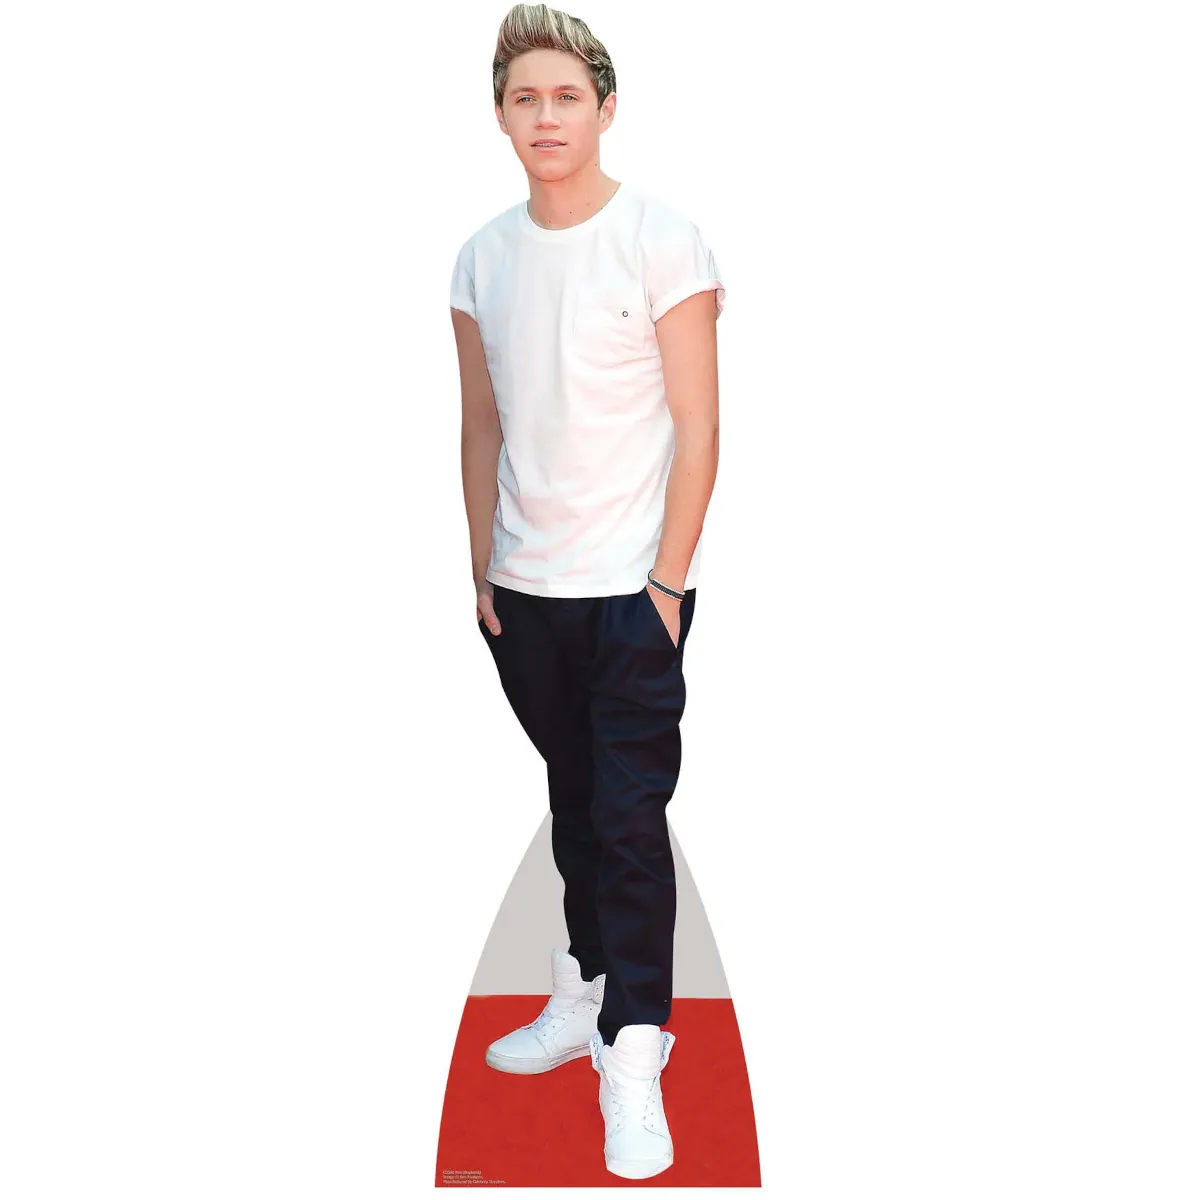 CS581 Niall Horan 'One Direction' (Irish Singer Songwriter) Lifesize Cardboard Cutout Standee Front